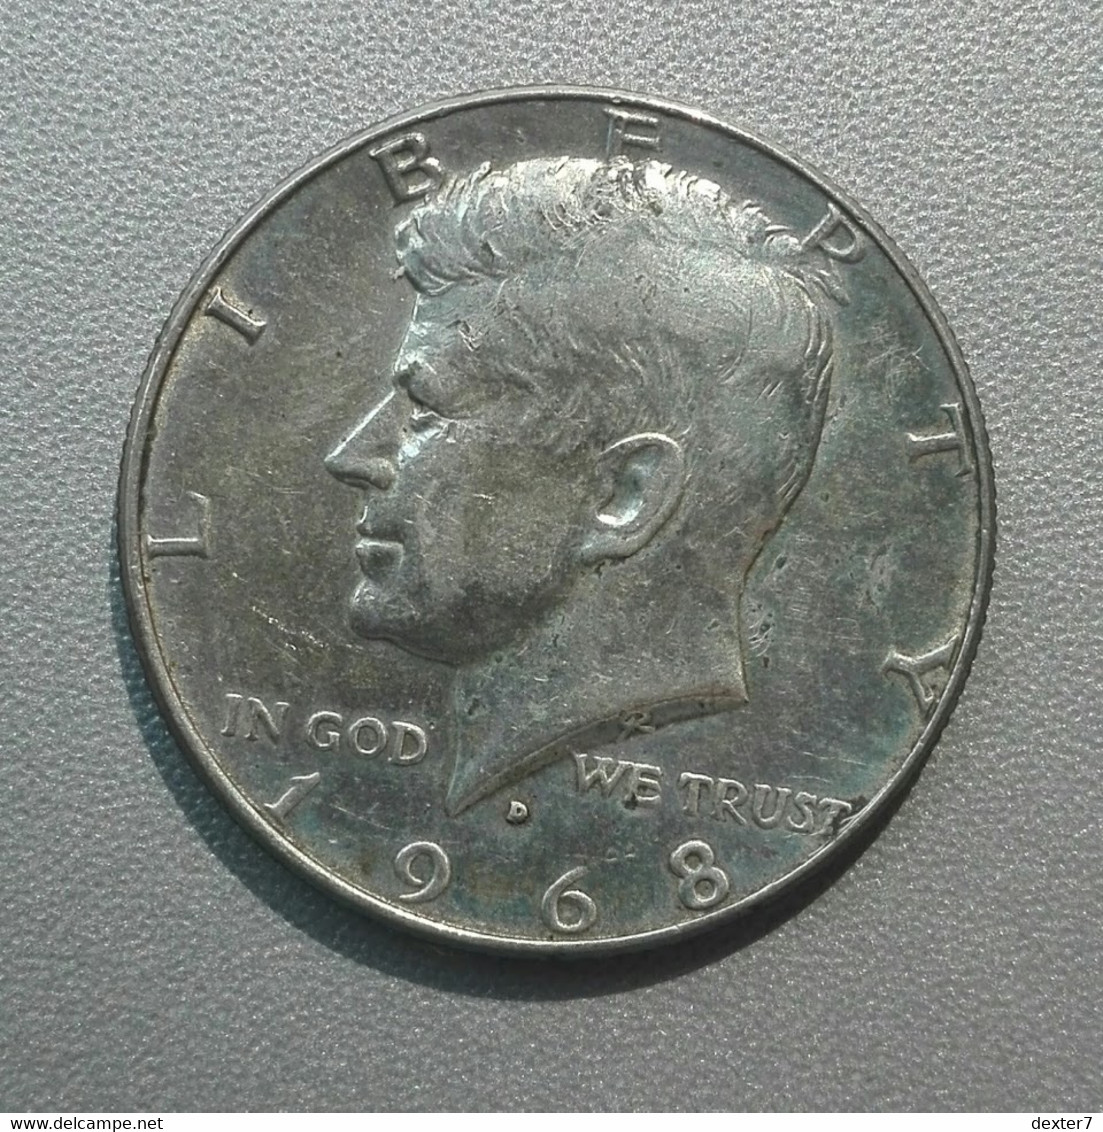 USA Stati Uniti - 1/2 Mezzo Dollaro 1968 Argento - United States Half Dollar Kennedy Silver Silber Argent [2] - 1964-…: Kennedy